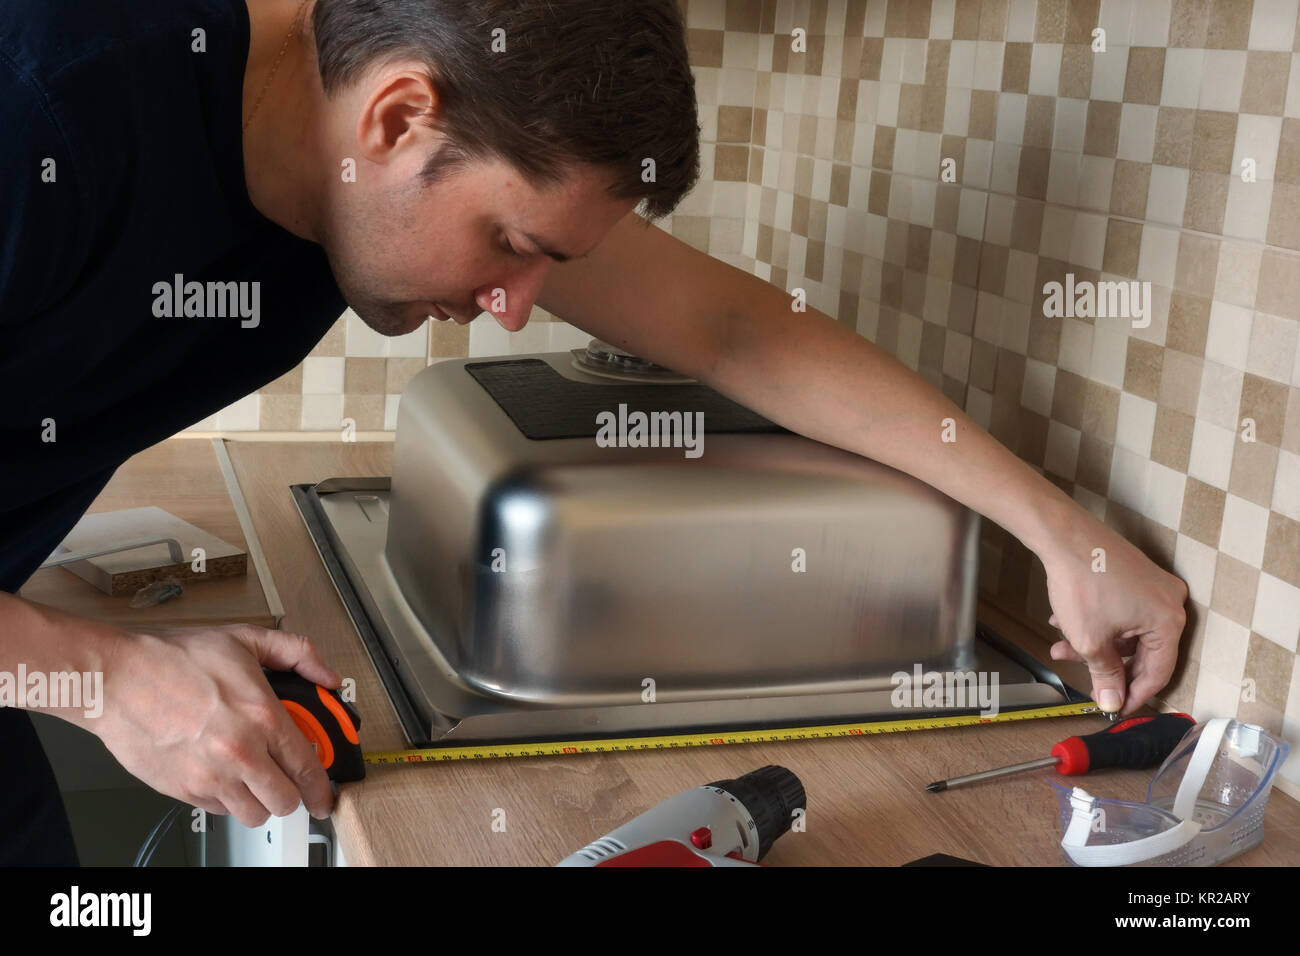 Stainless Steel Kitchen Sink Installation By A Man